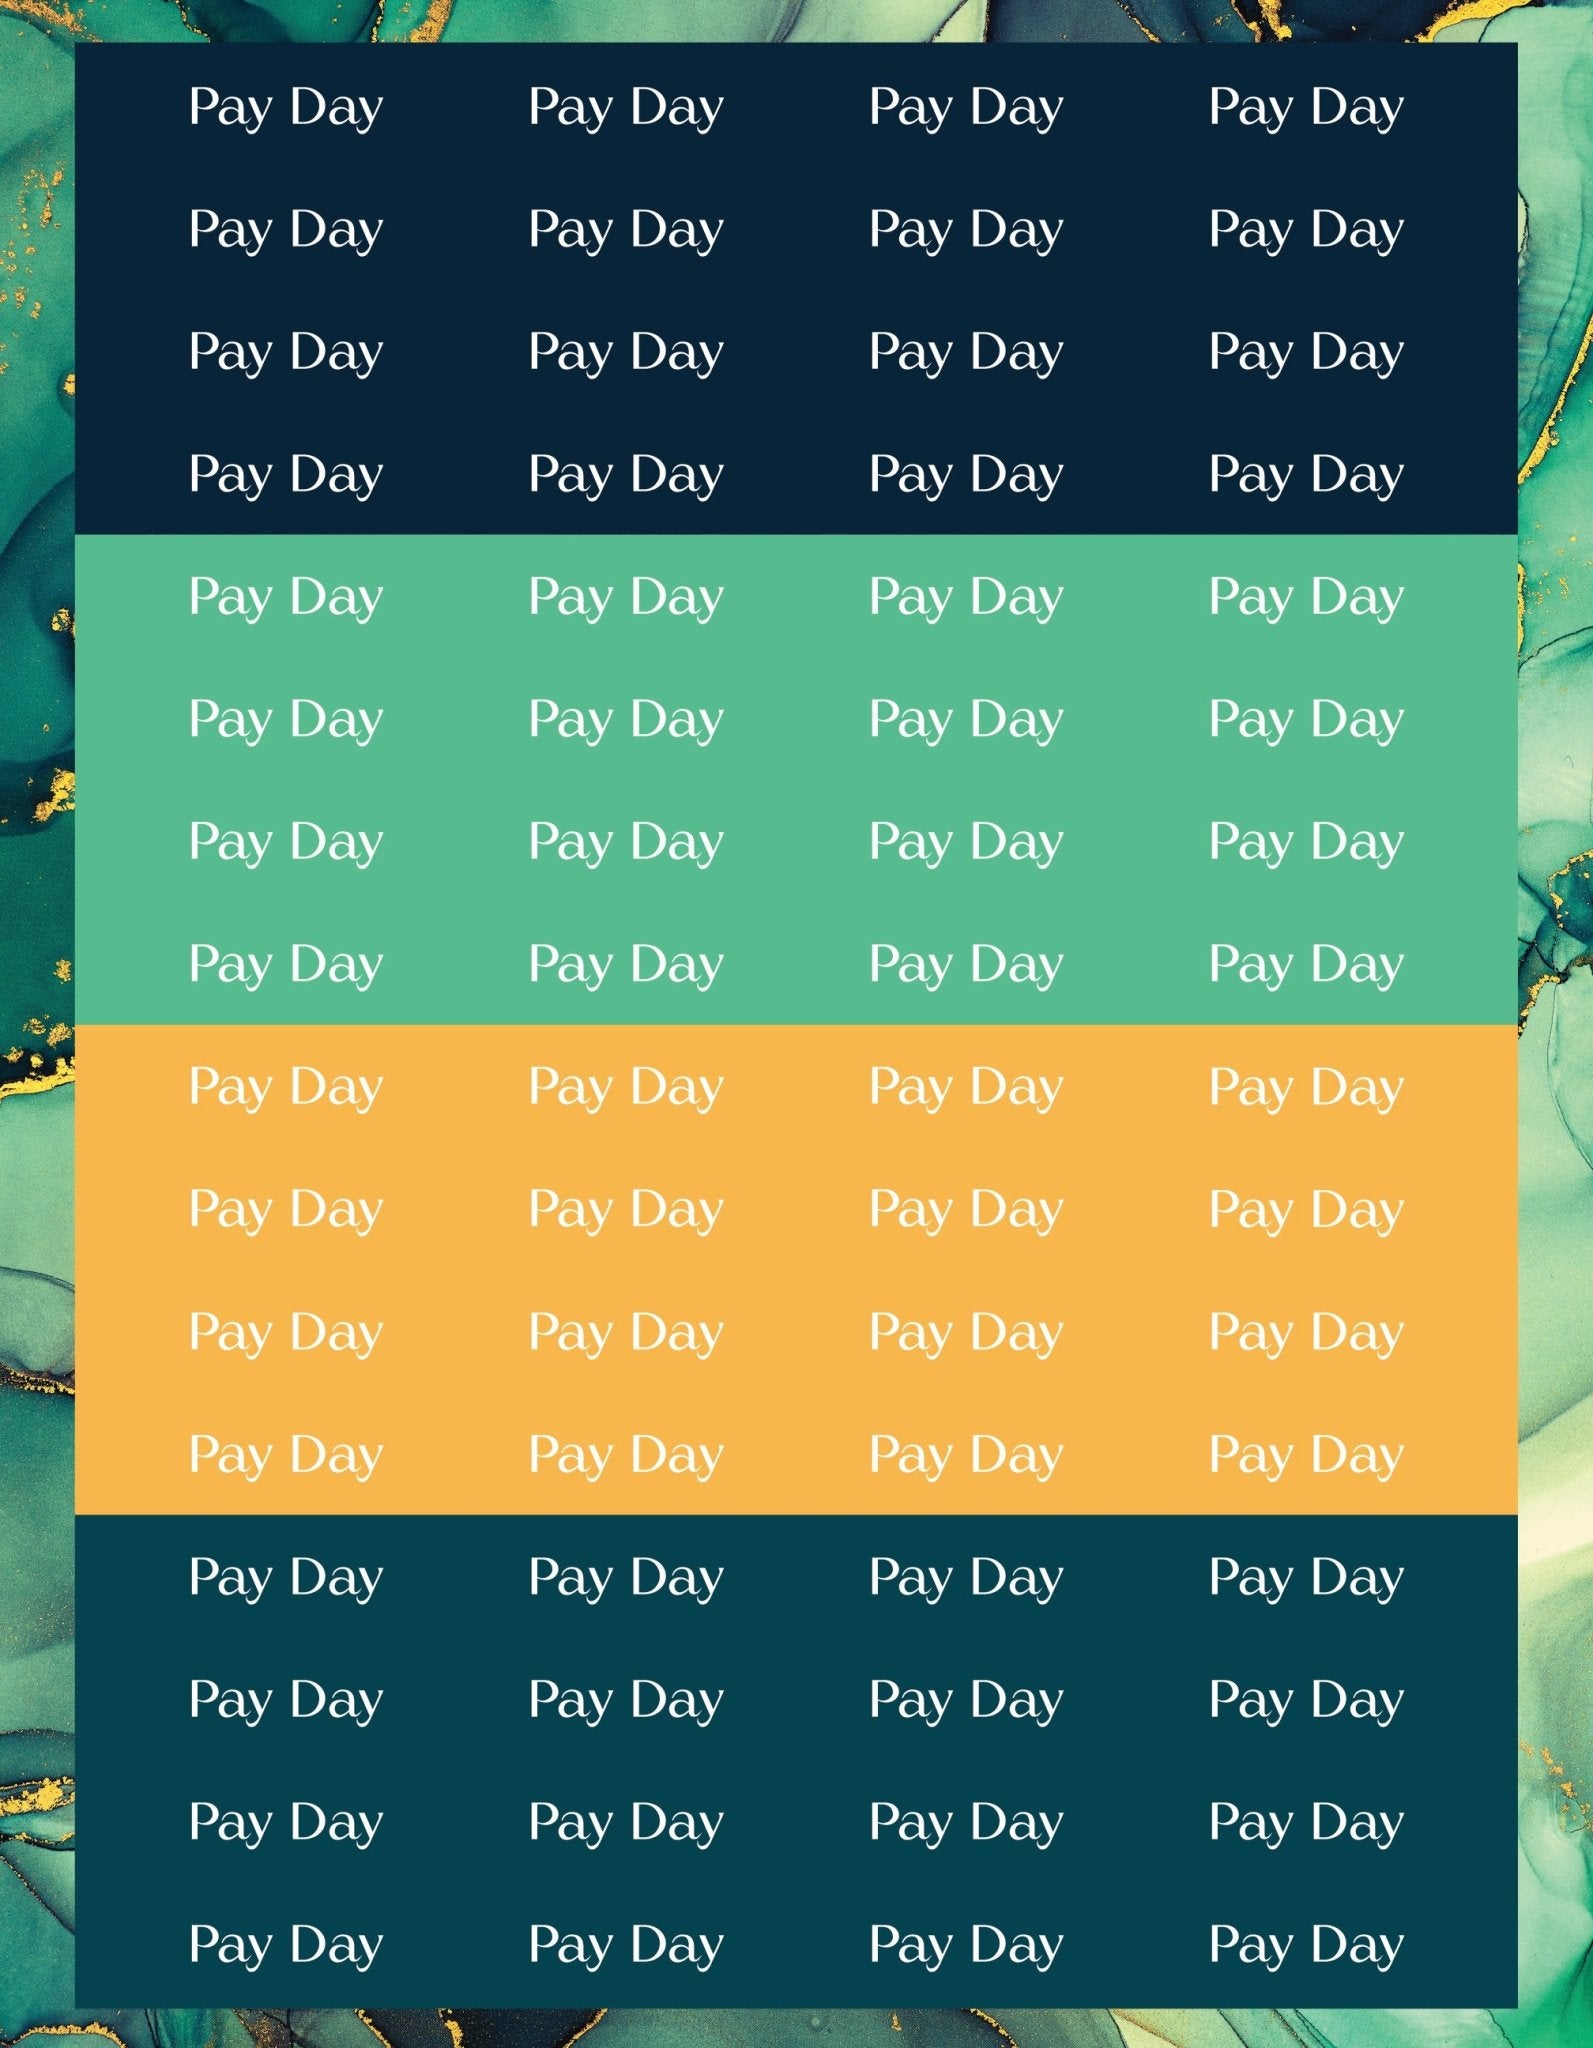 Pay Day Sticker Sheets - 9 Designs/Colors - Colibri Paper Co